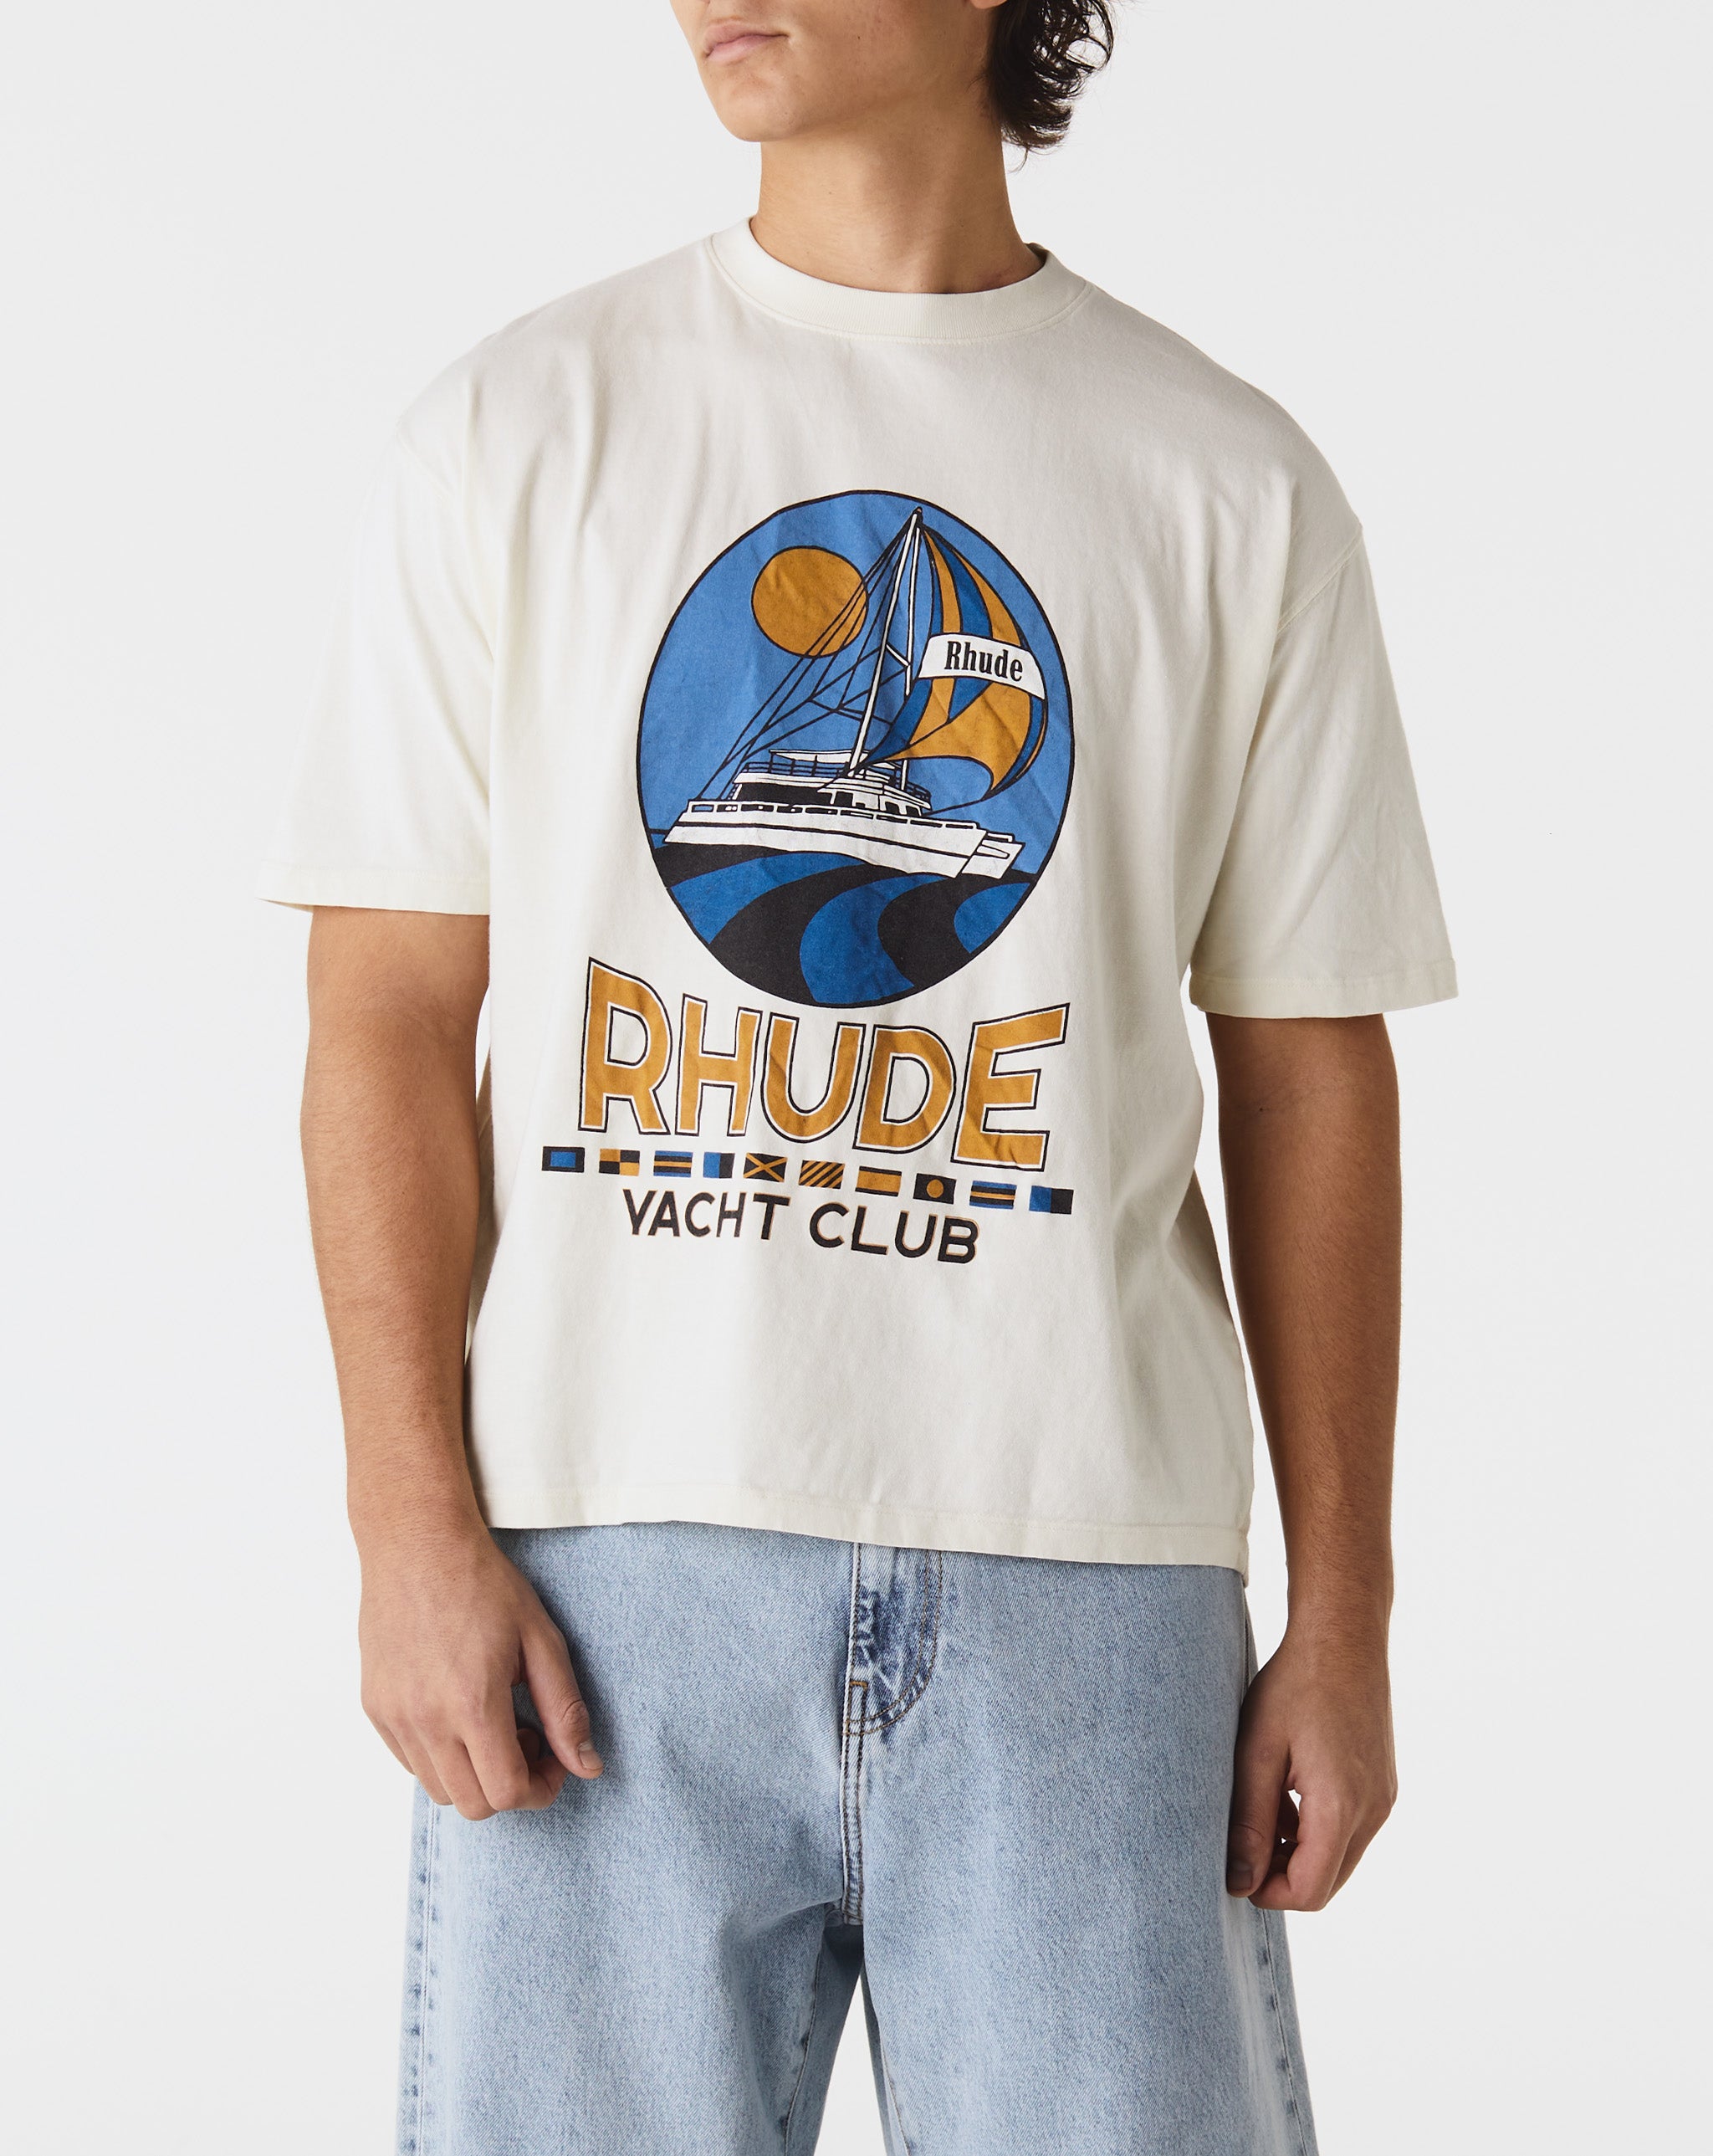 Rhude Yacht Club T-Shirt  - XHIBITION